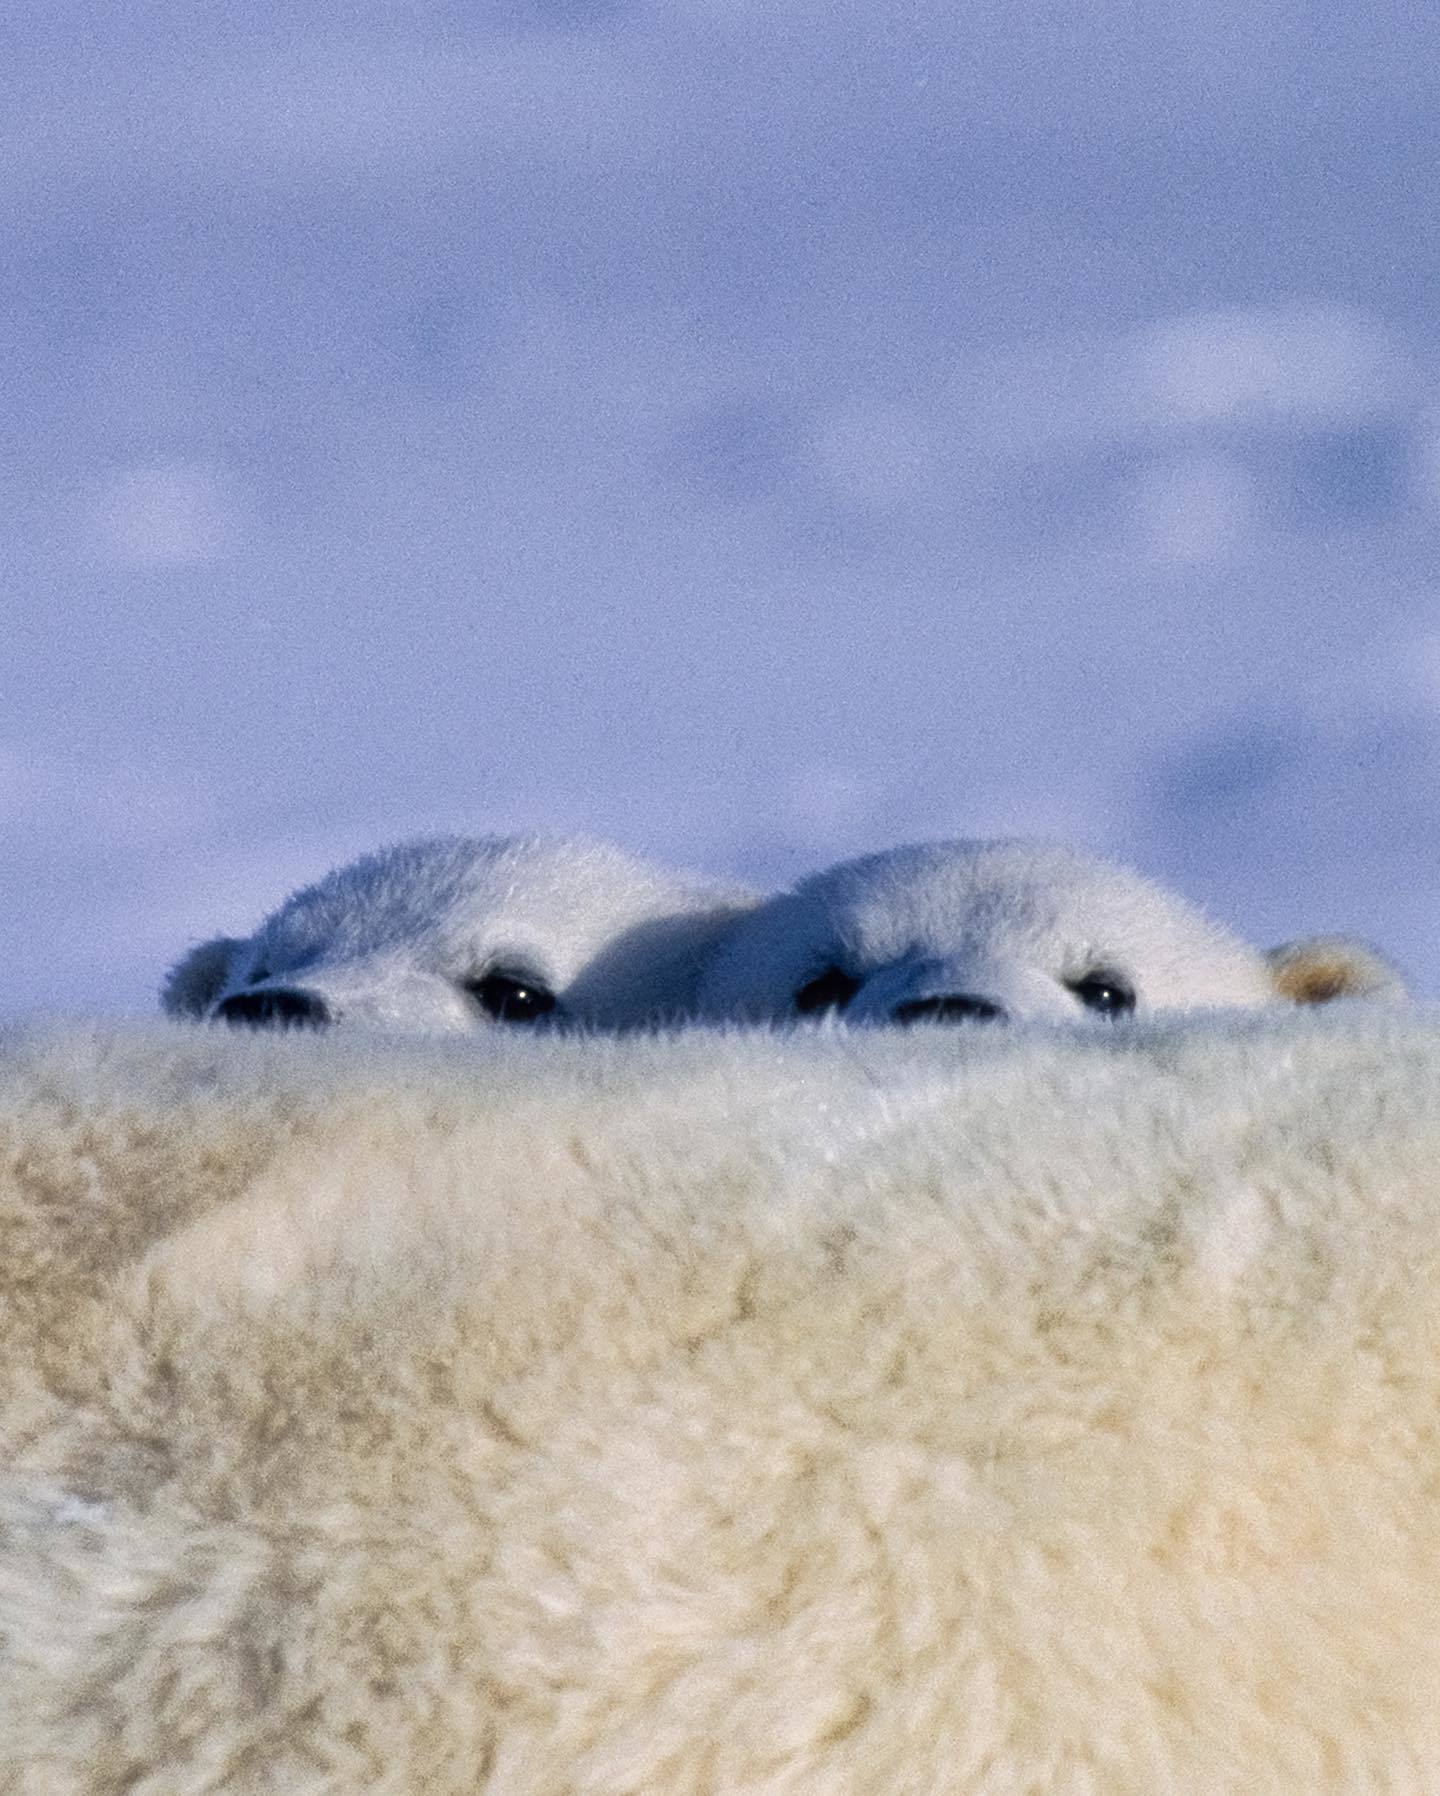  北极熊宝宝，来自摄影师Paul Nicklen。 